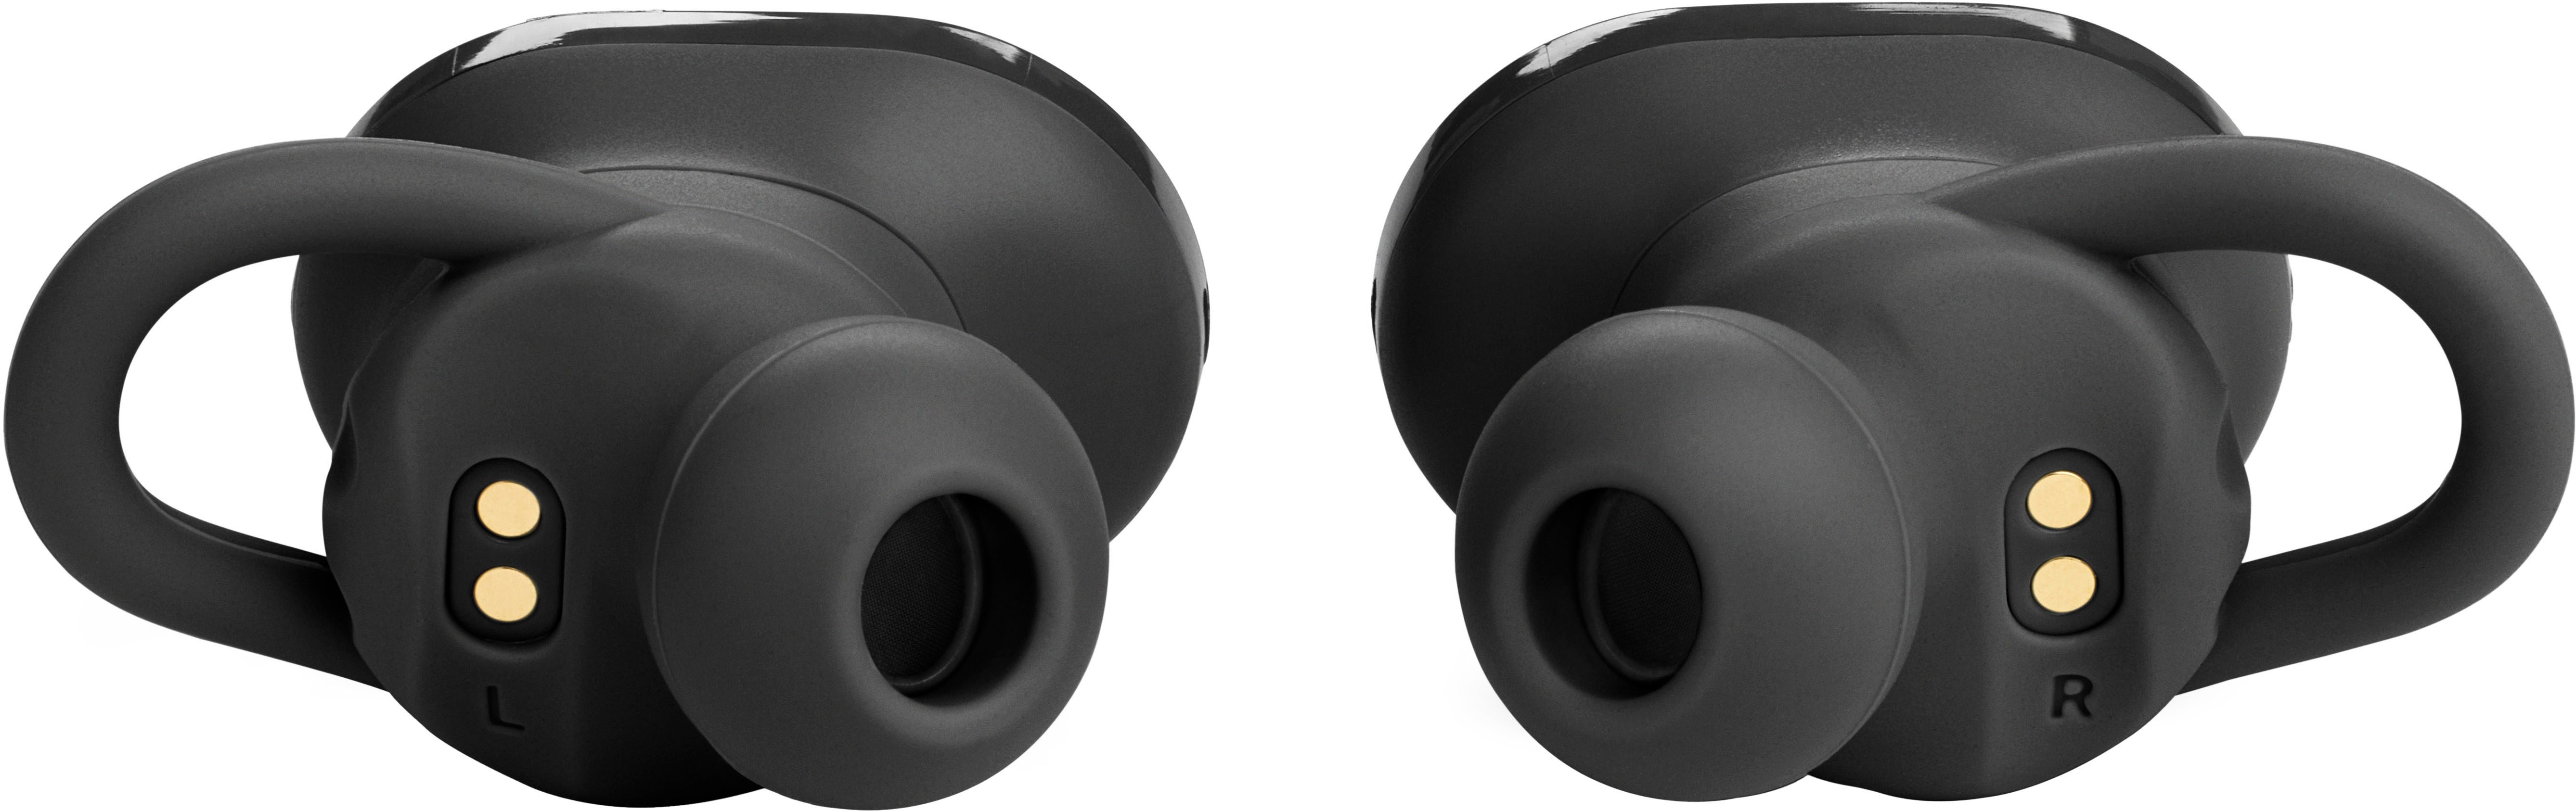 JBL Endurance Race Waterproof True Wireless Sport Earbud Headphones Black  JBLENDURACEBLKAM - Best Buy